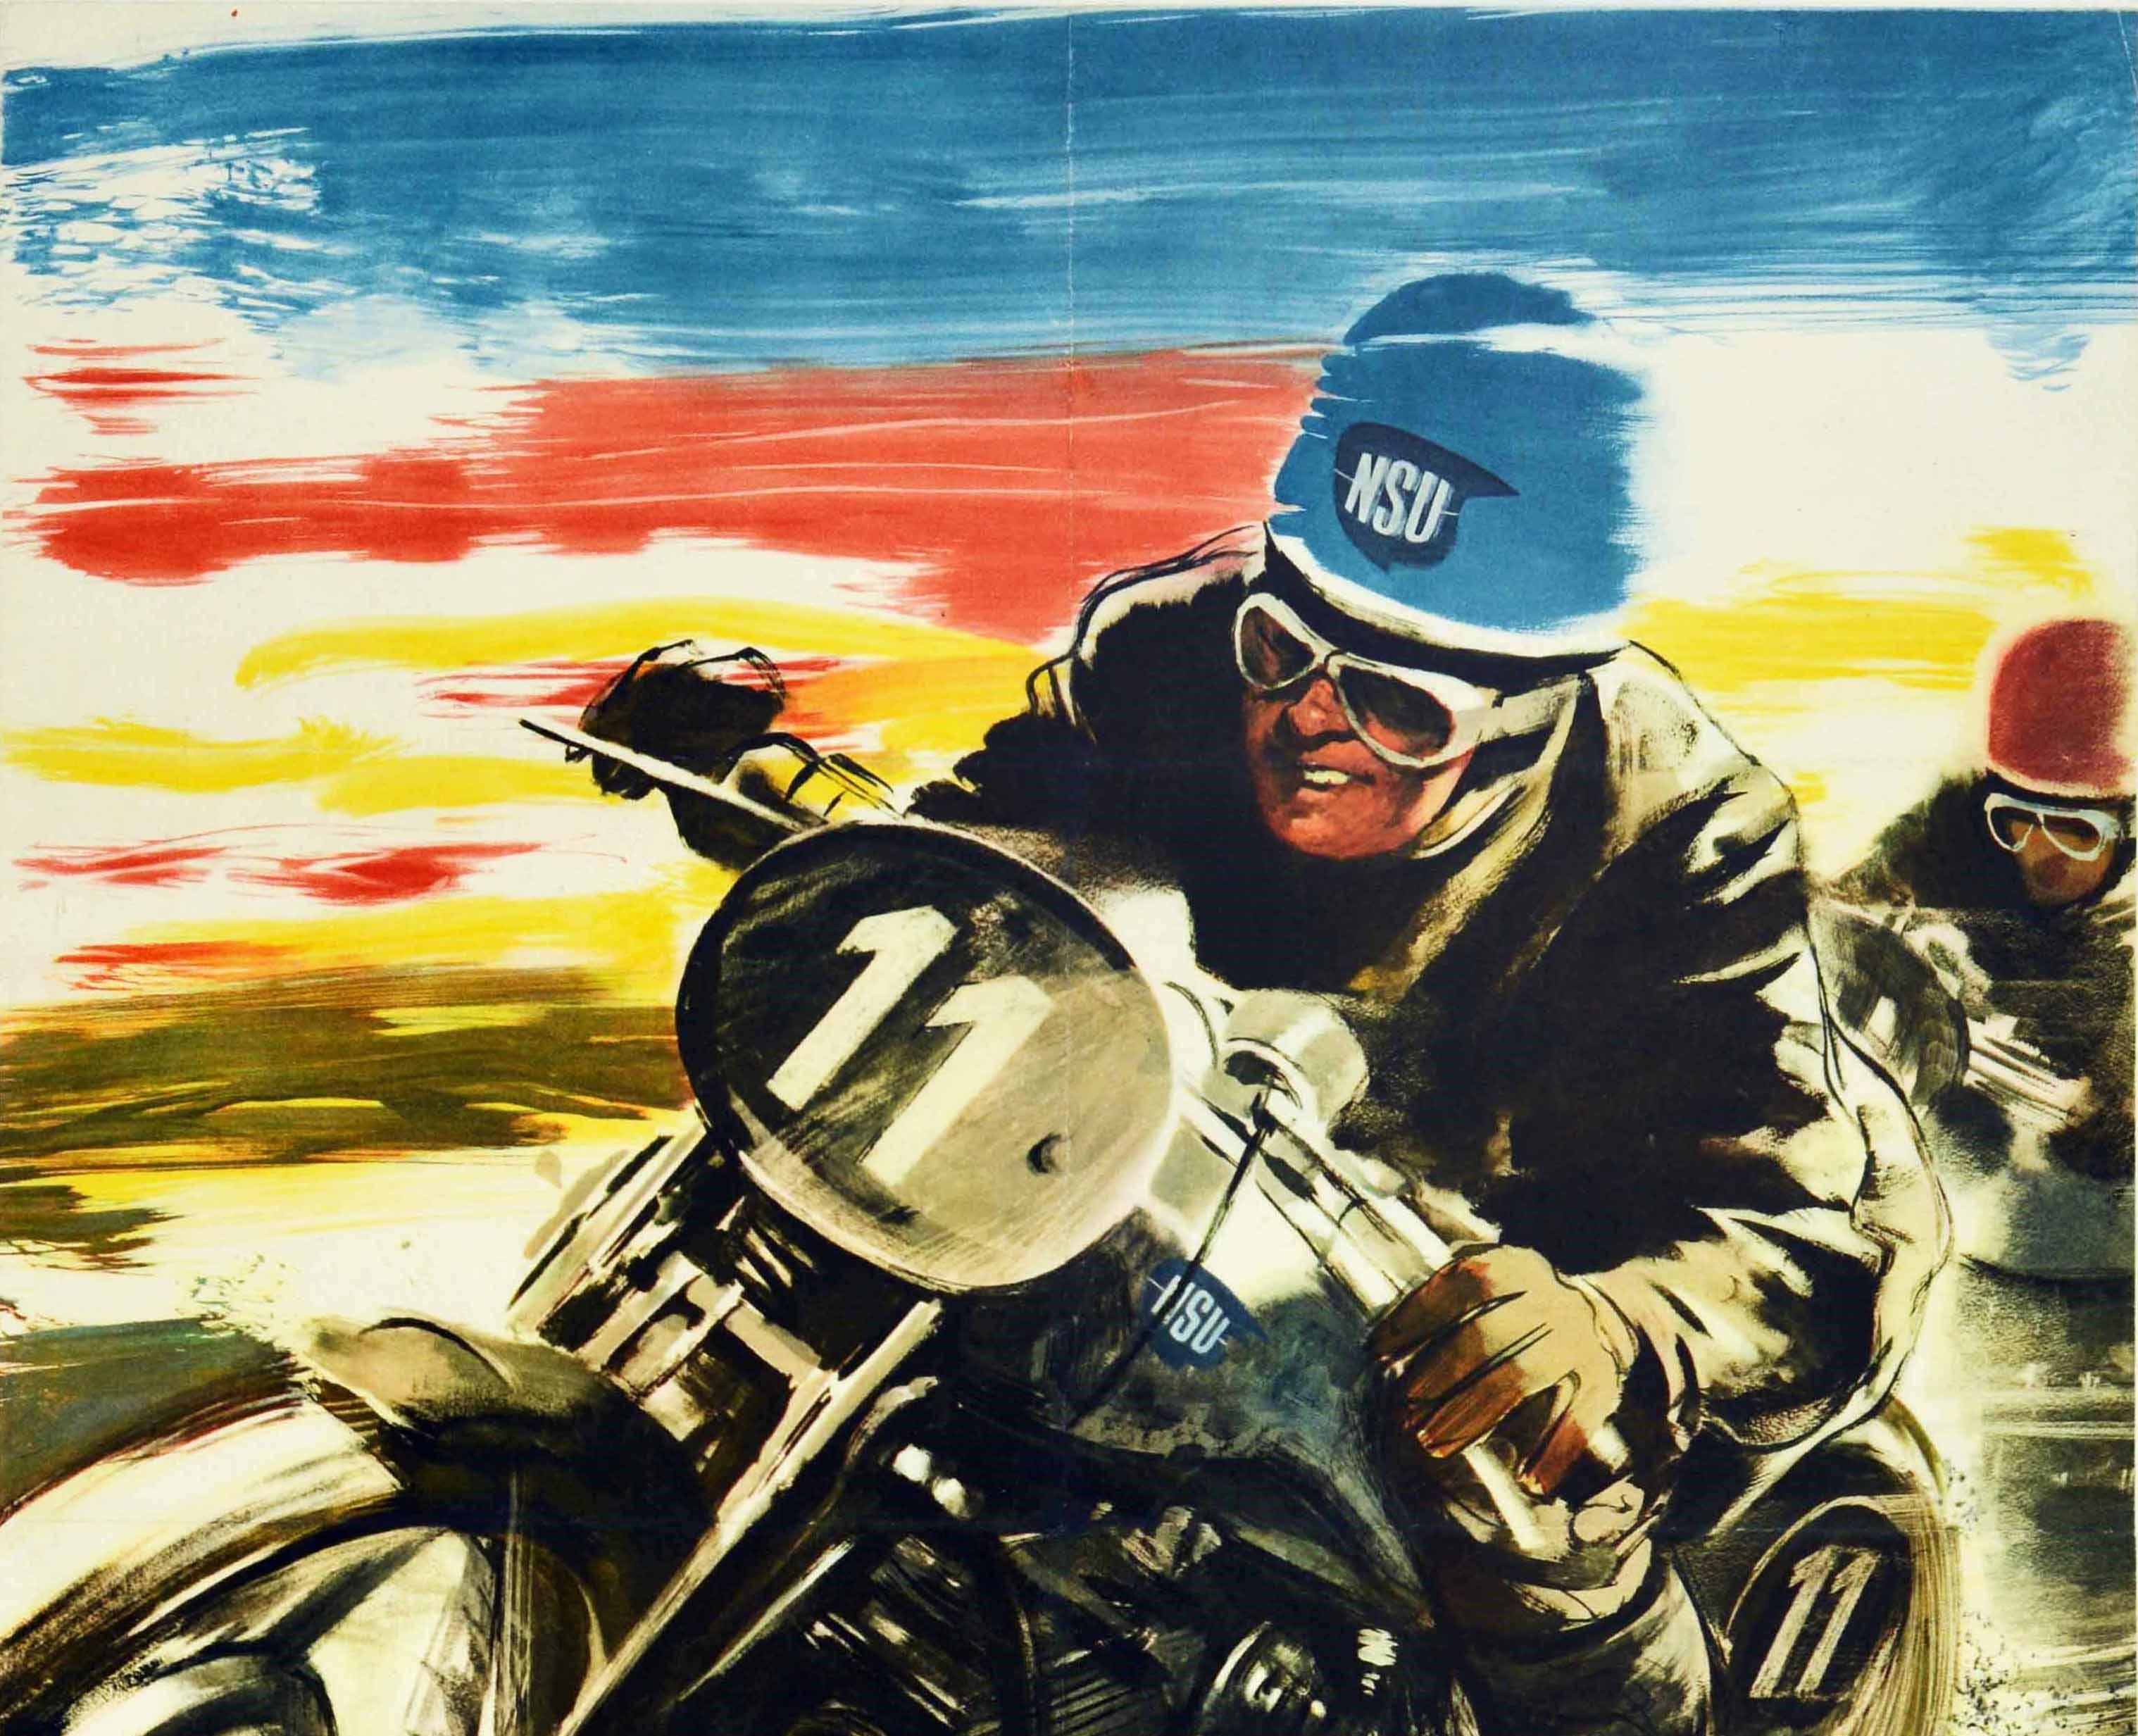 Original Vintage Poster NSU Motorcycle Racing Victorious Machines Great Drivers - Print by Victor Mundorff